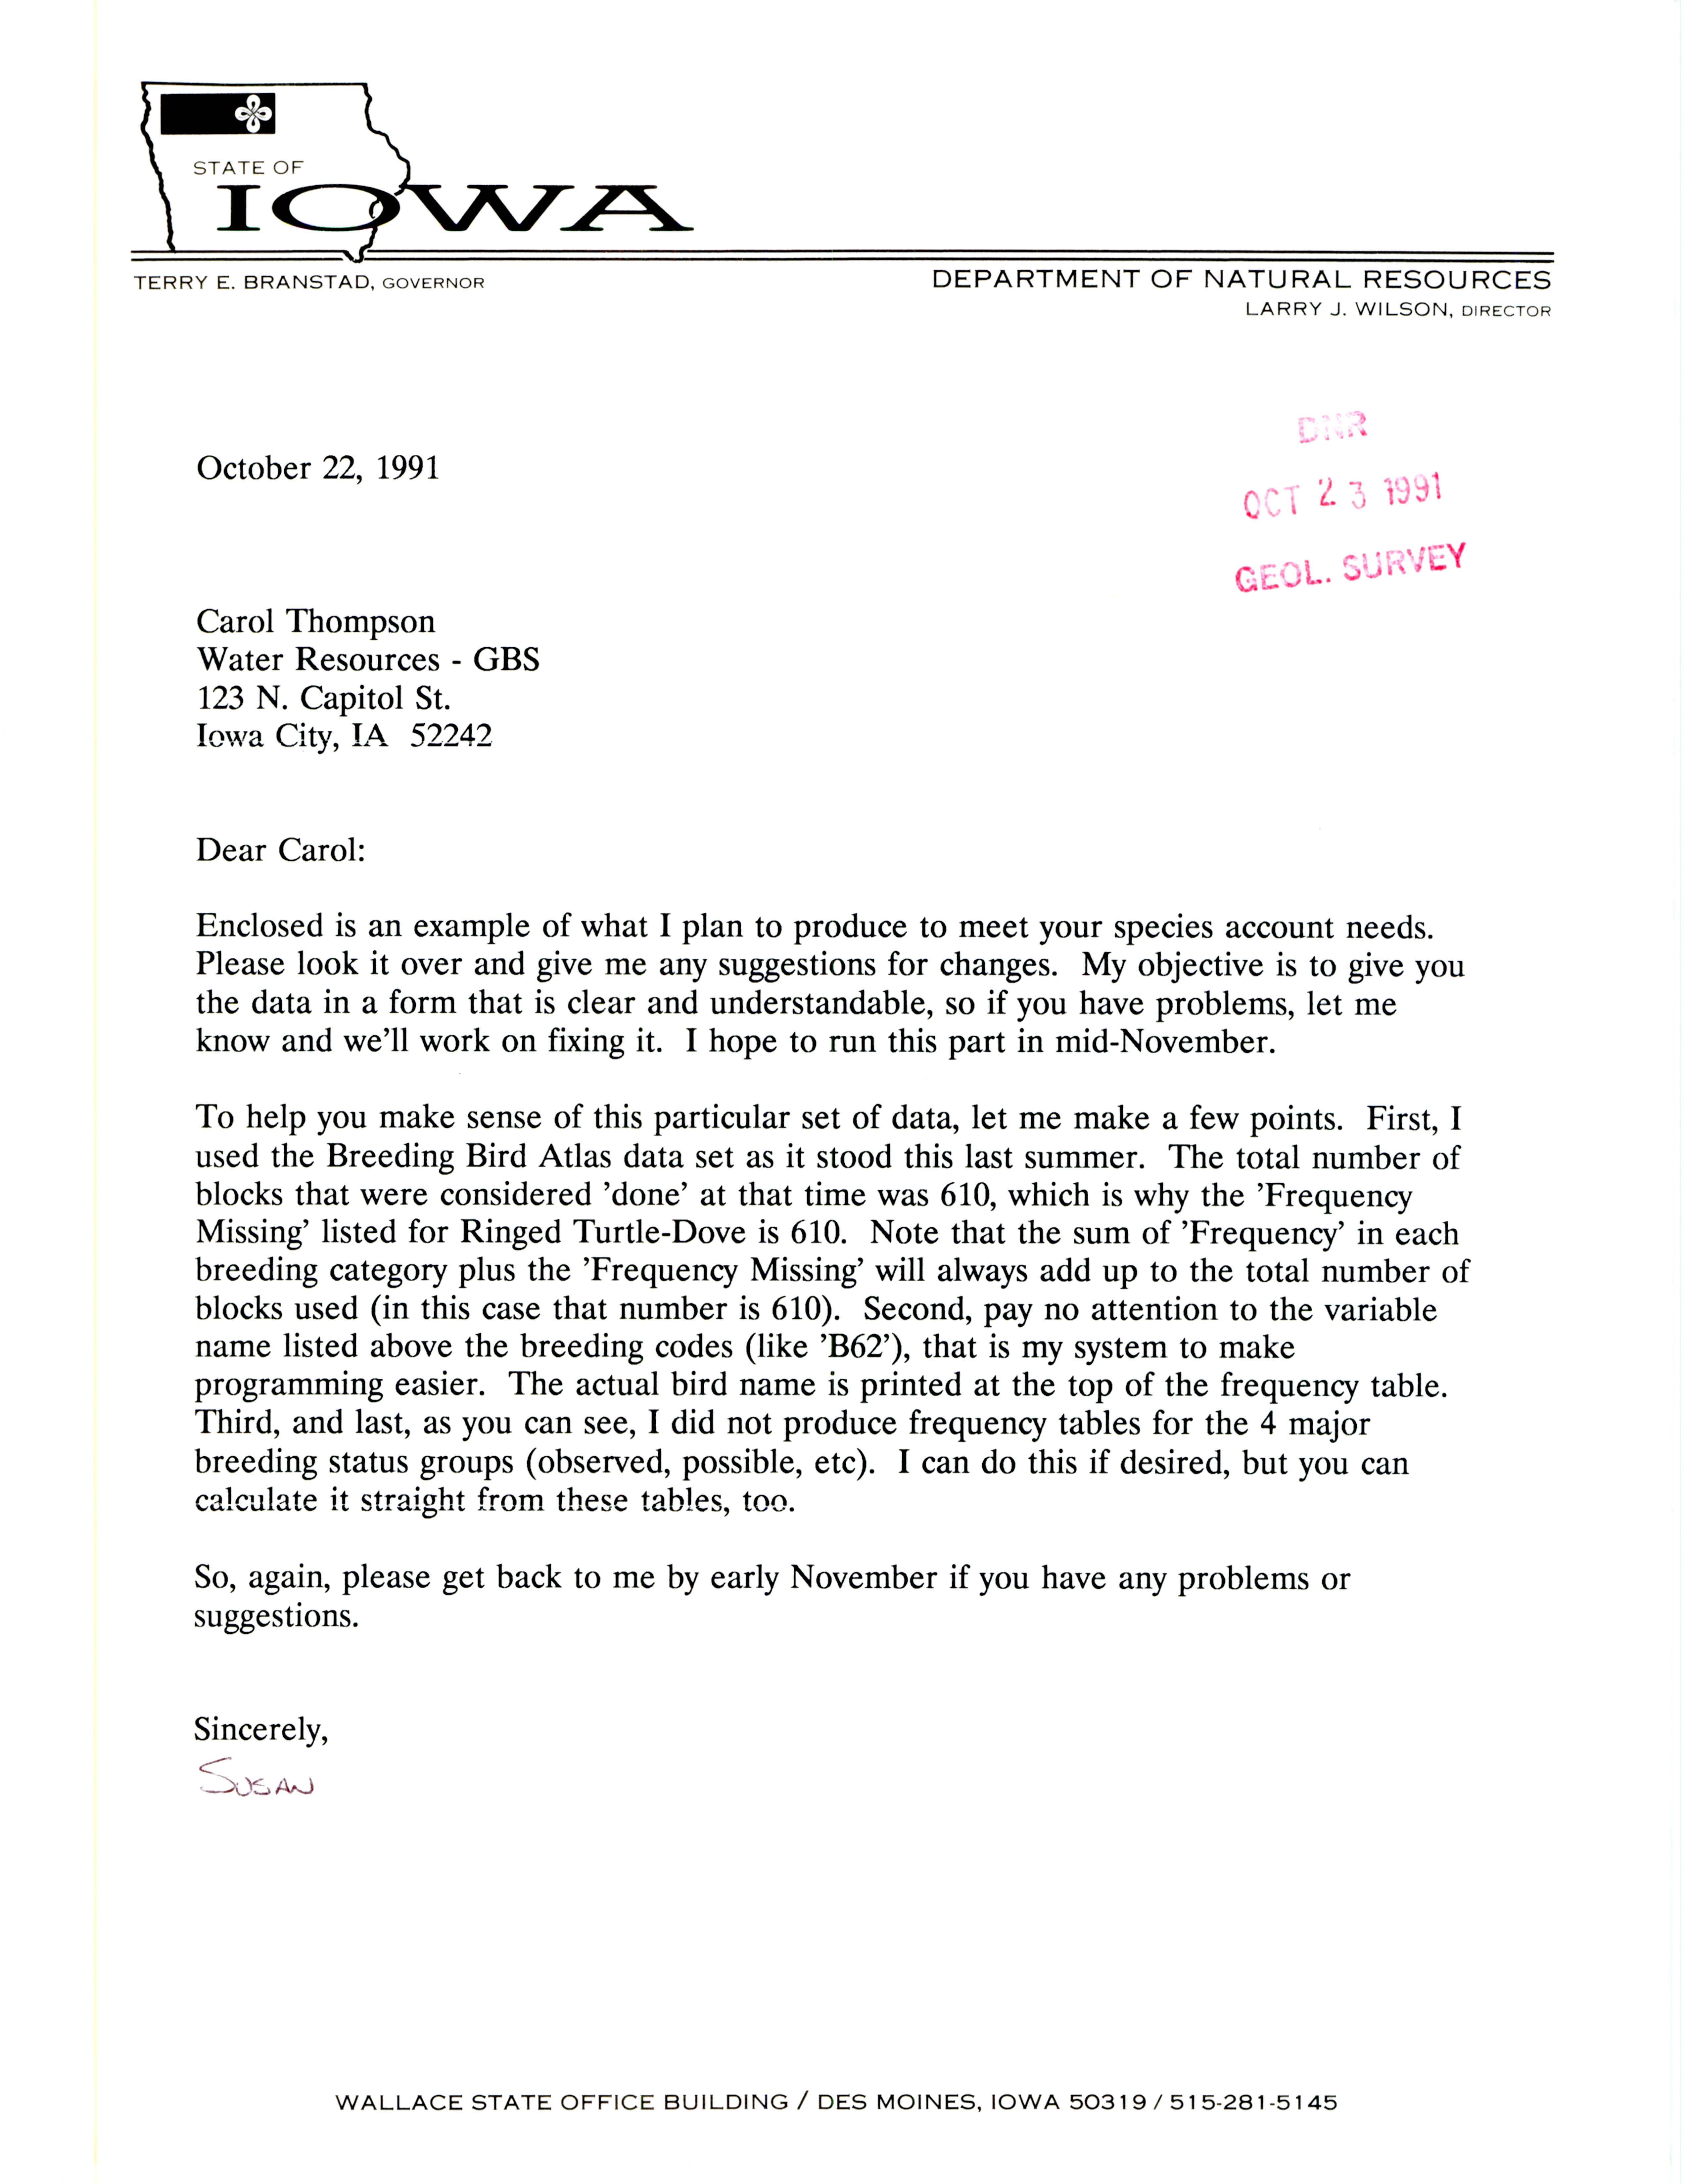 Letter to Carol A. Thompson regarding work on Breeding Bird Atlas, October 22, 1991